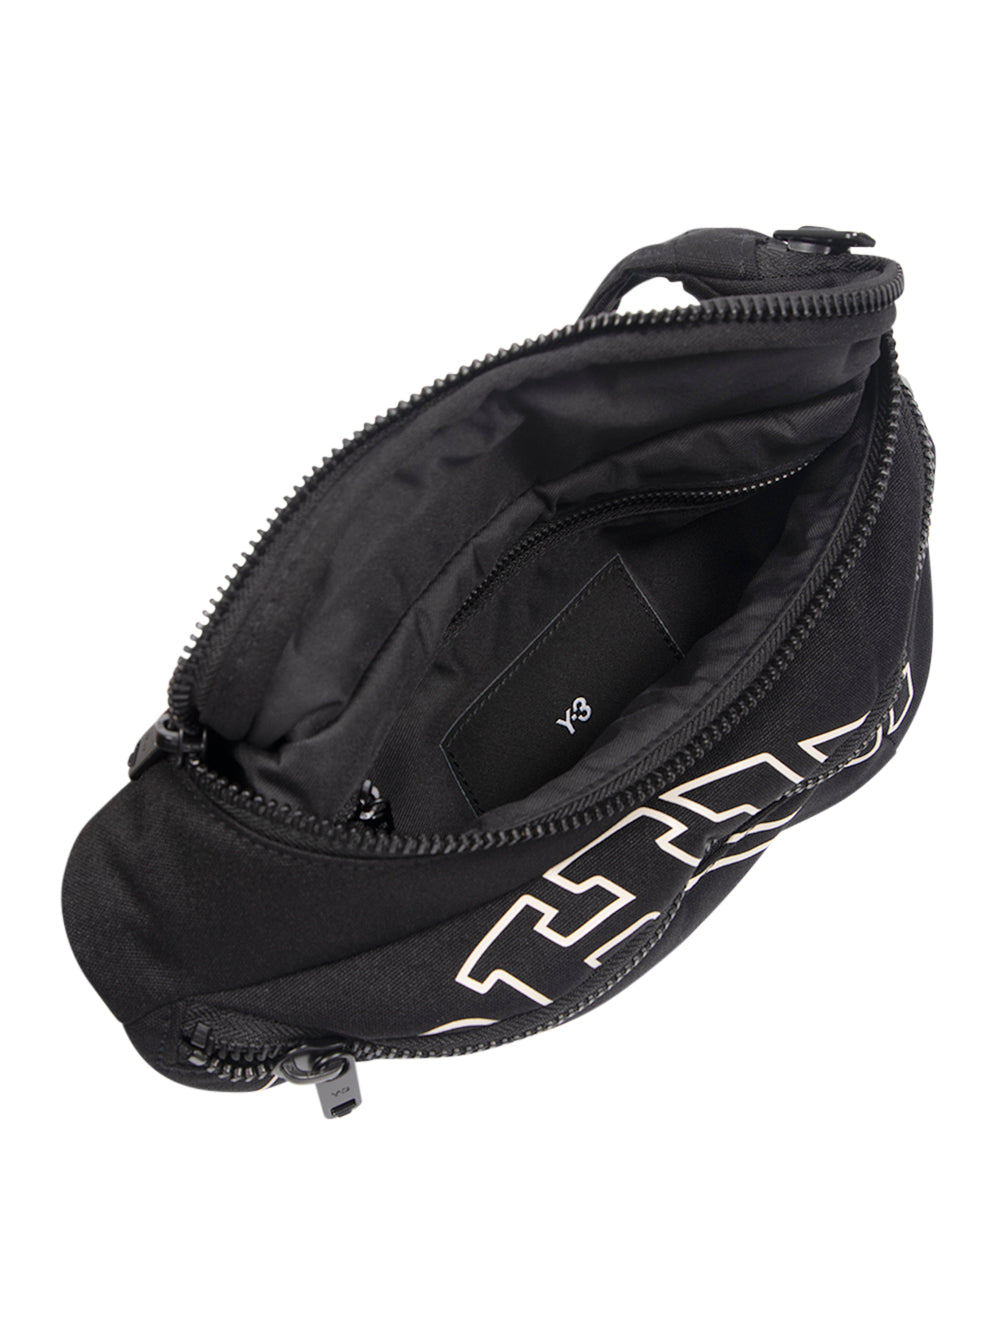 Morphed Crossbody Bag (Black)